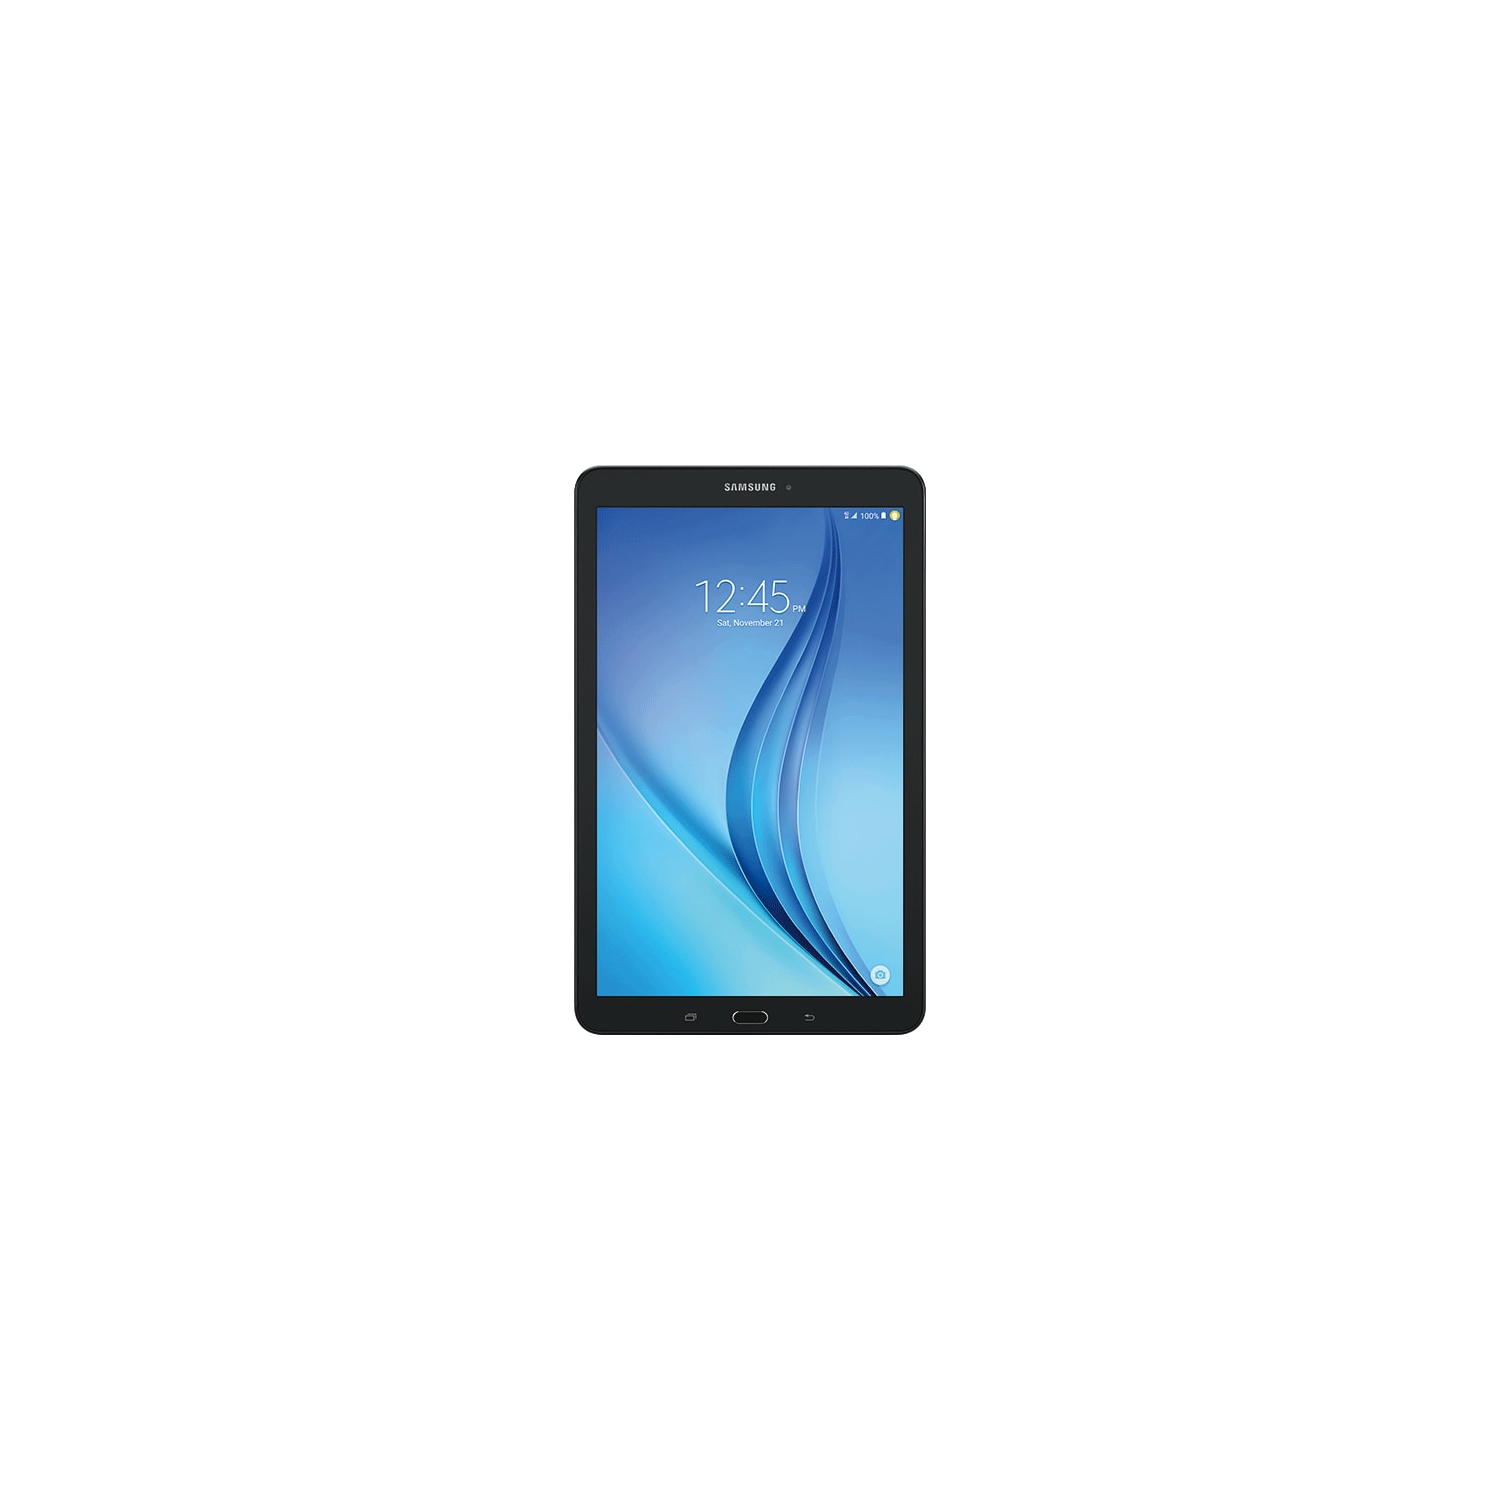 Refurbished (Excellent) - Samsung Galaxy Tab E SM-T377 16GB Tablet - 8"